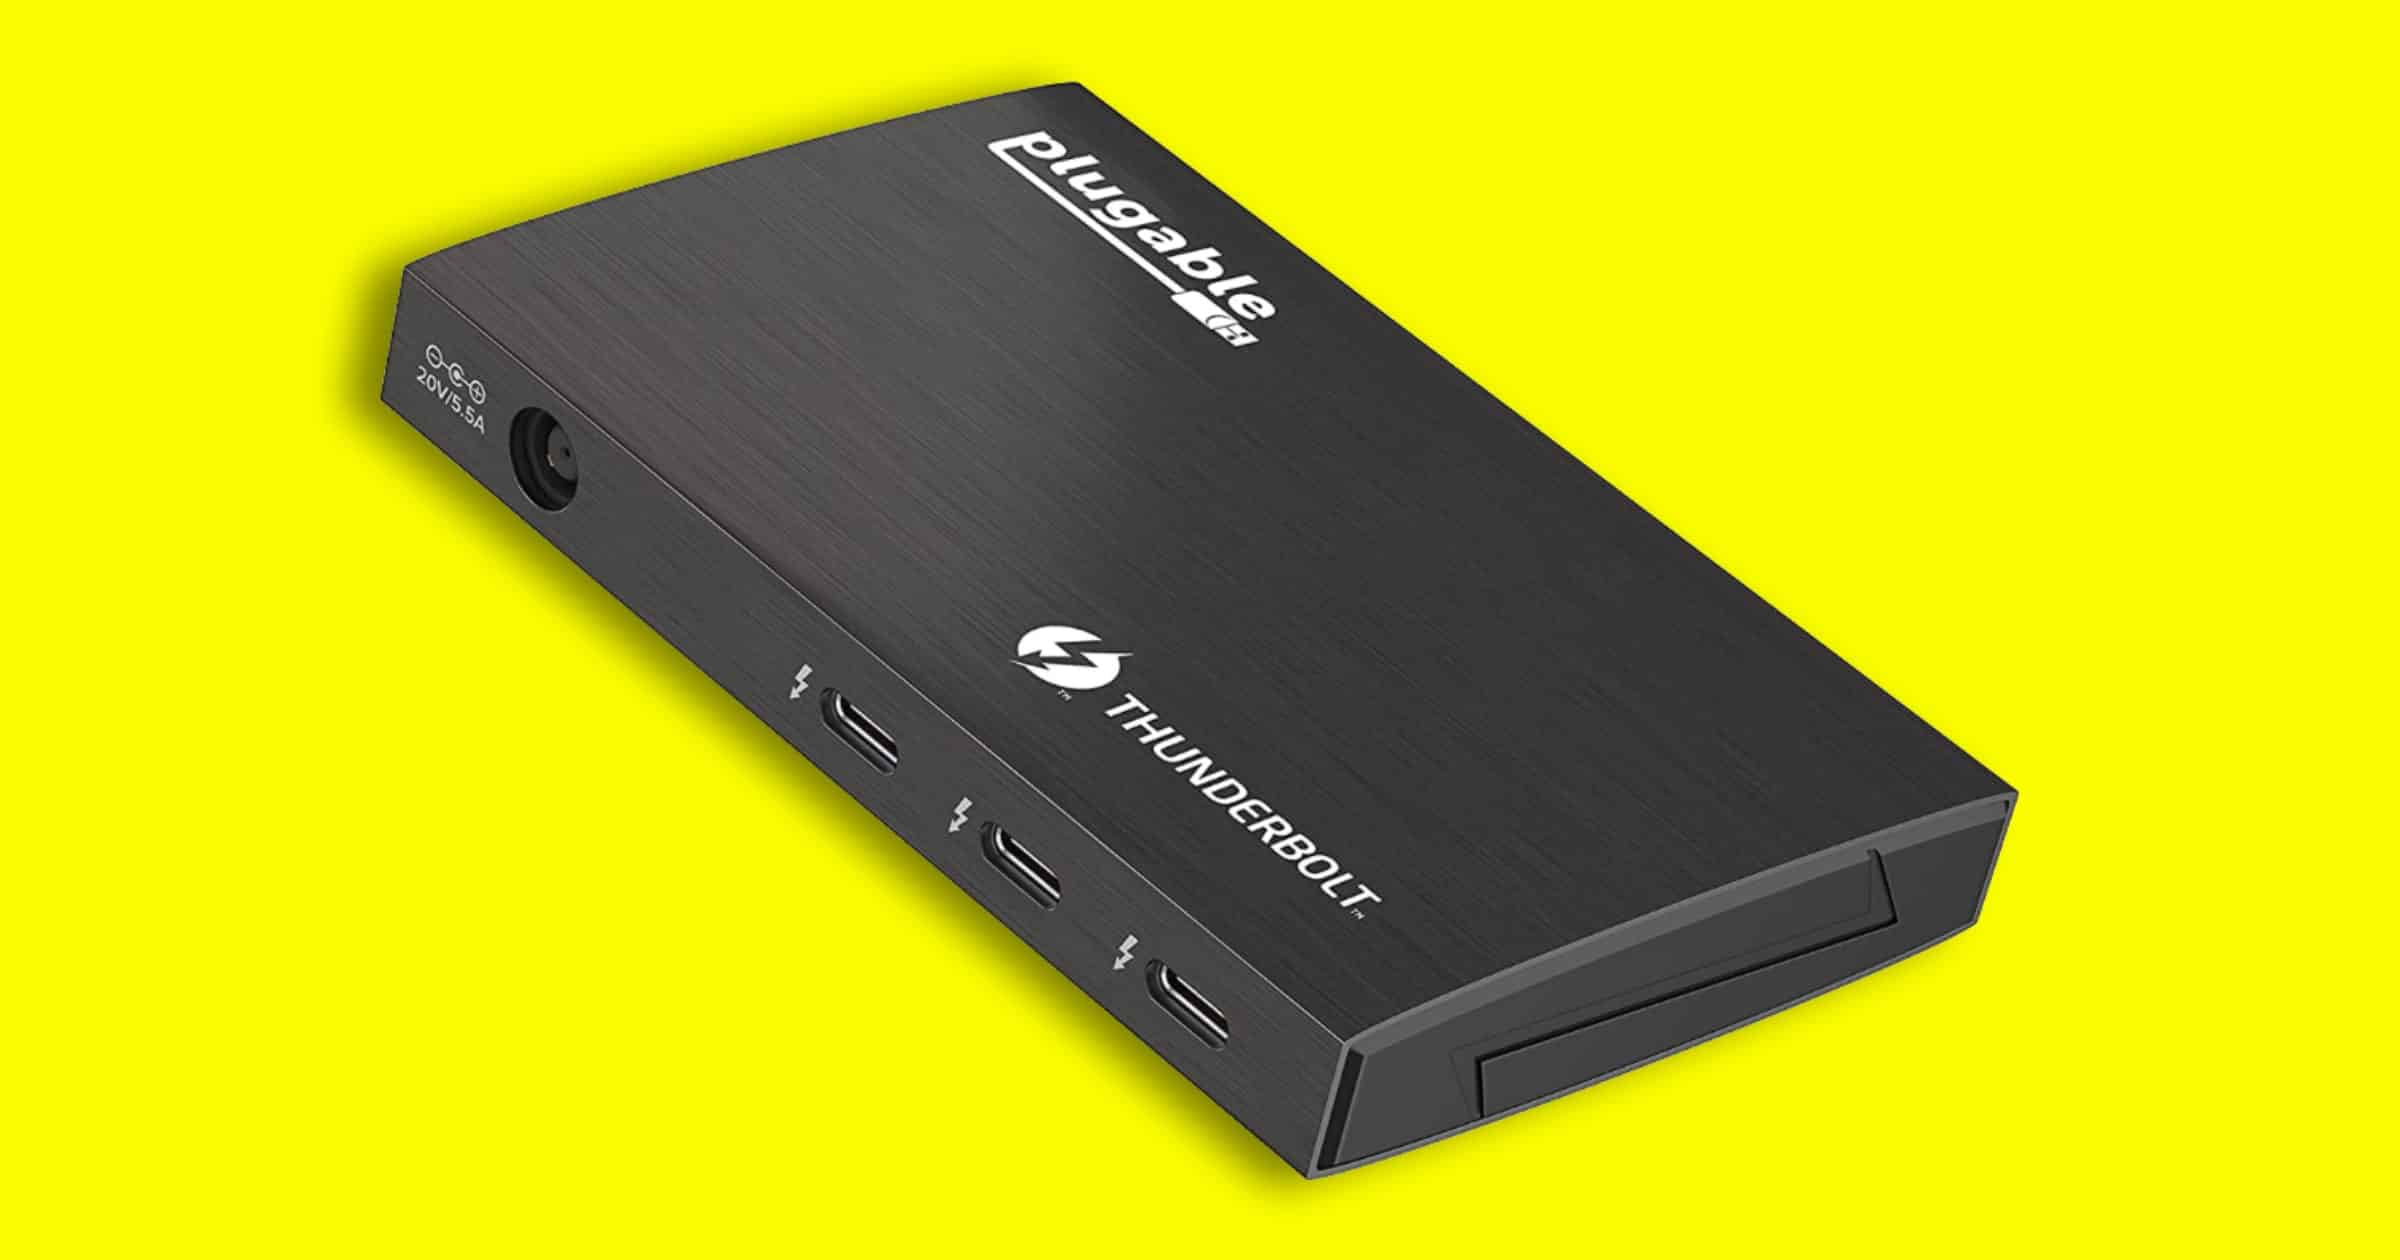 Plugable Launches Thunderbolt 4 Hub With USB-C Design